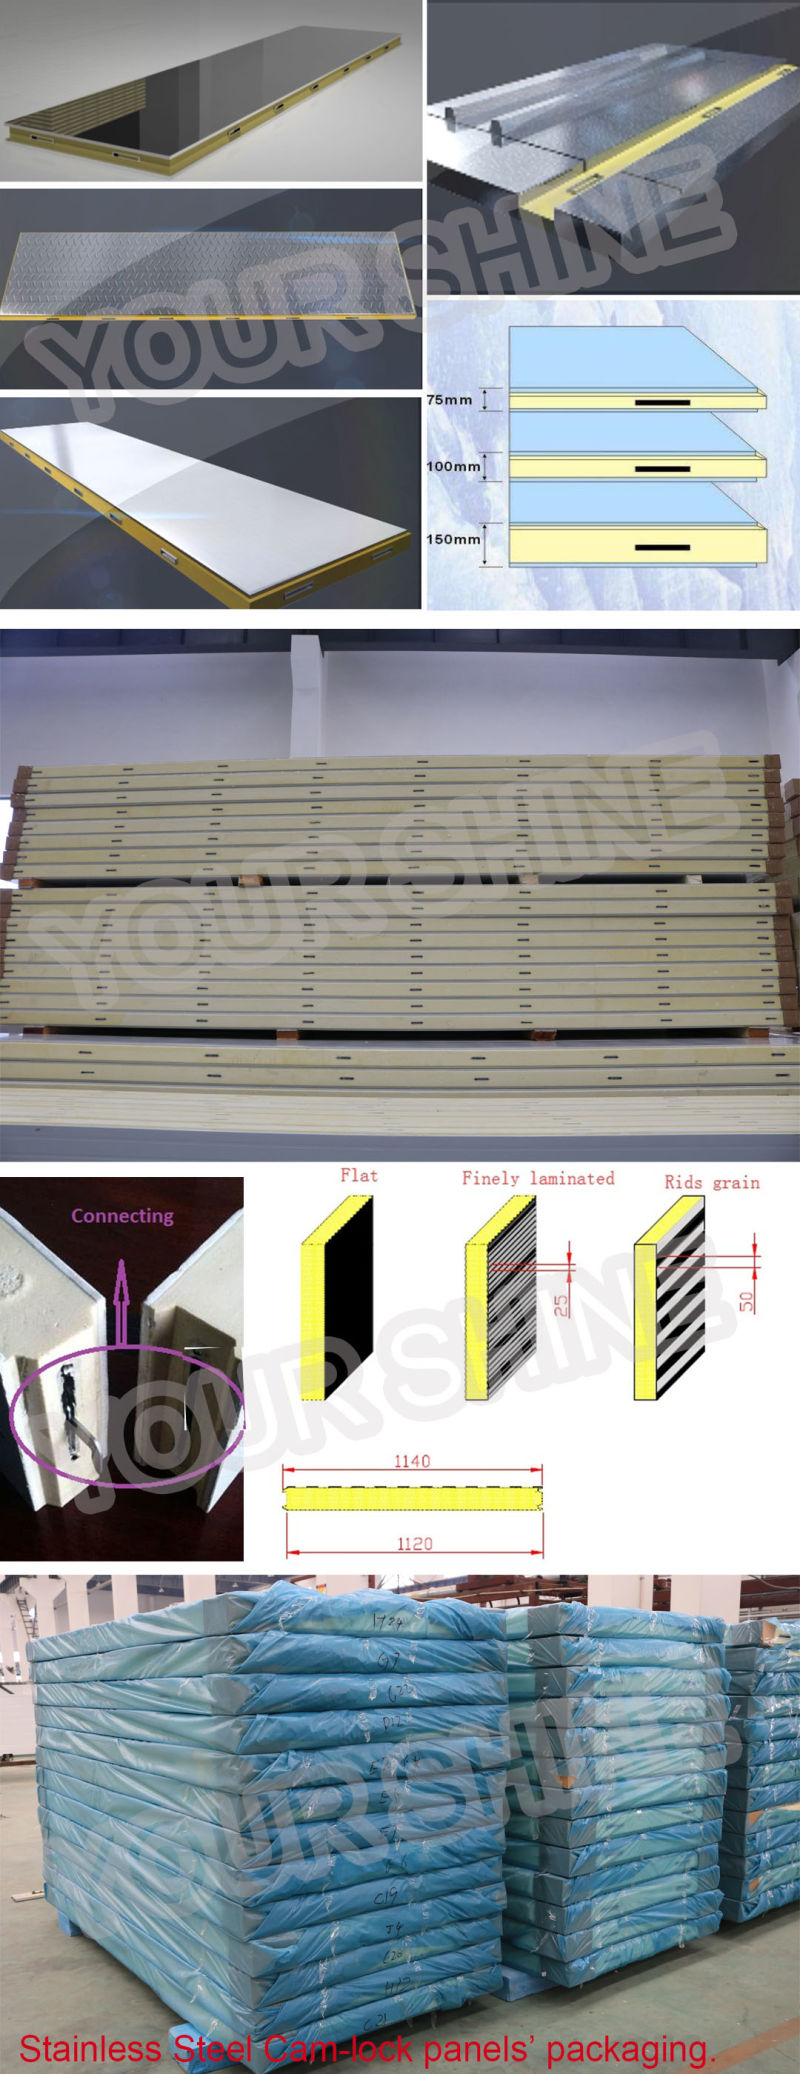 Polyurethane Insulated Panels